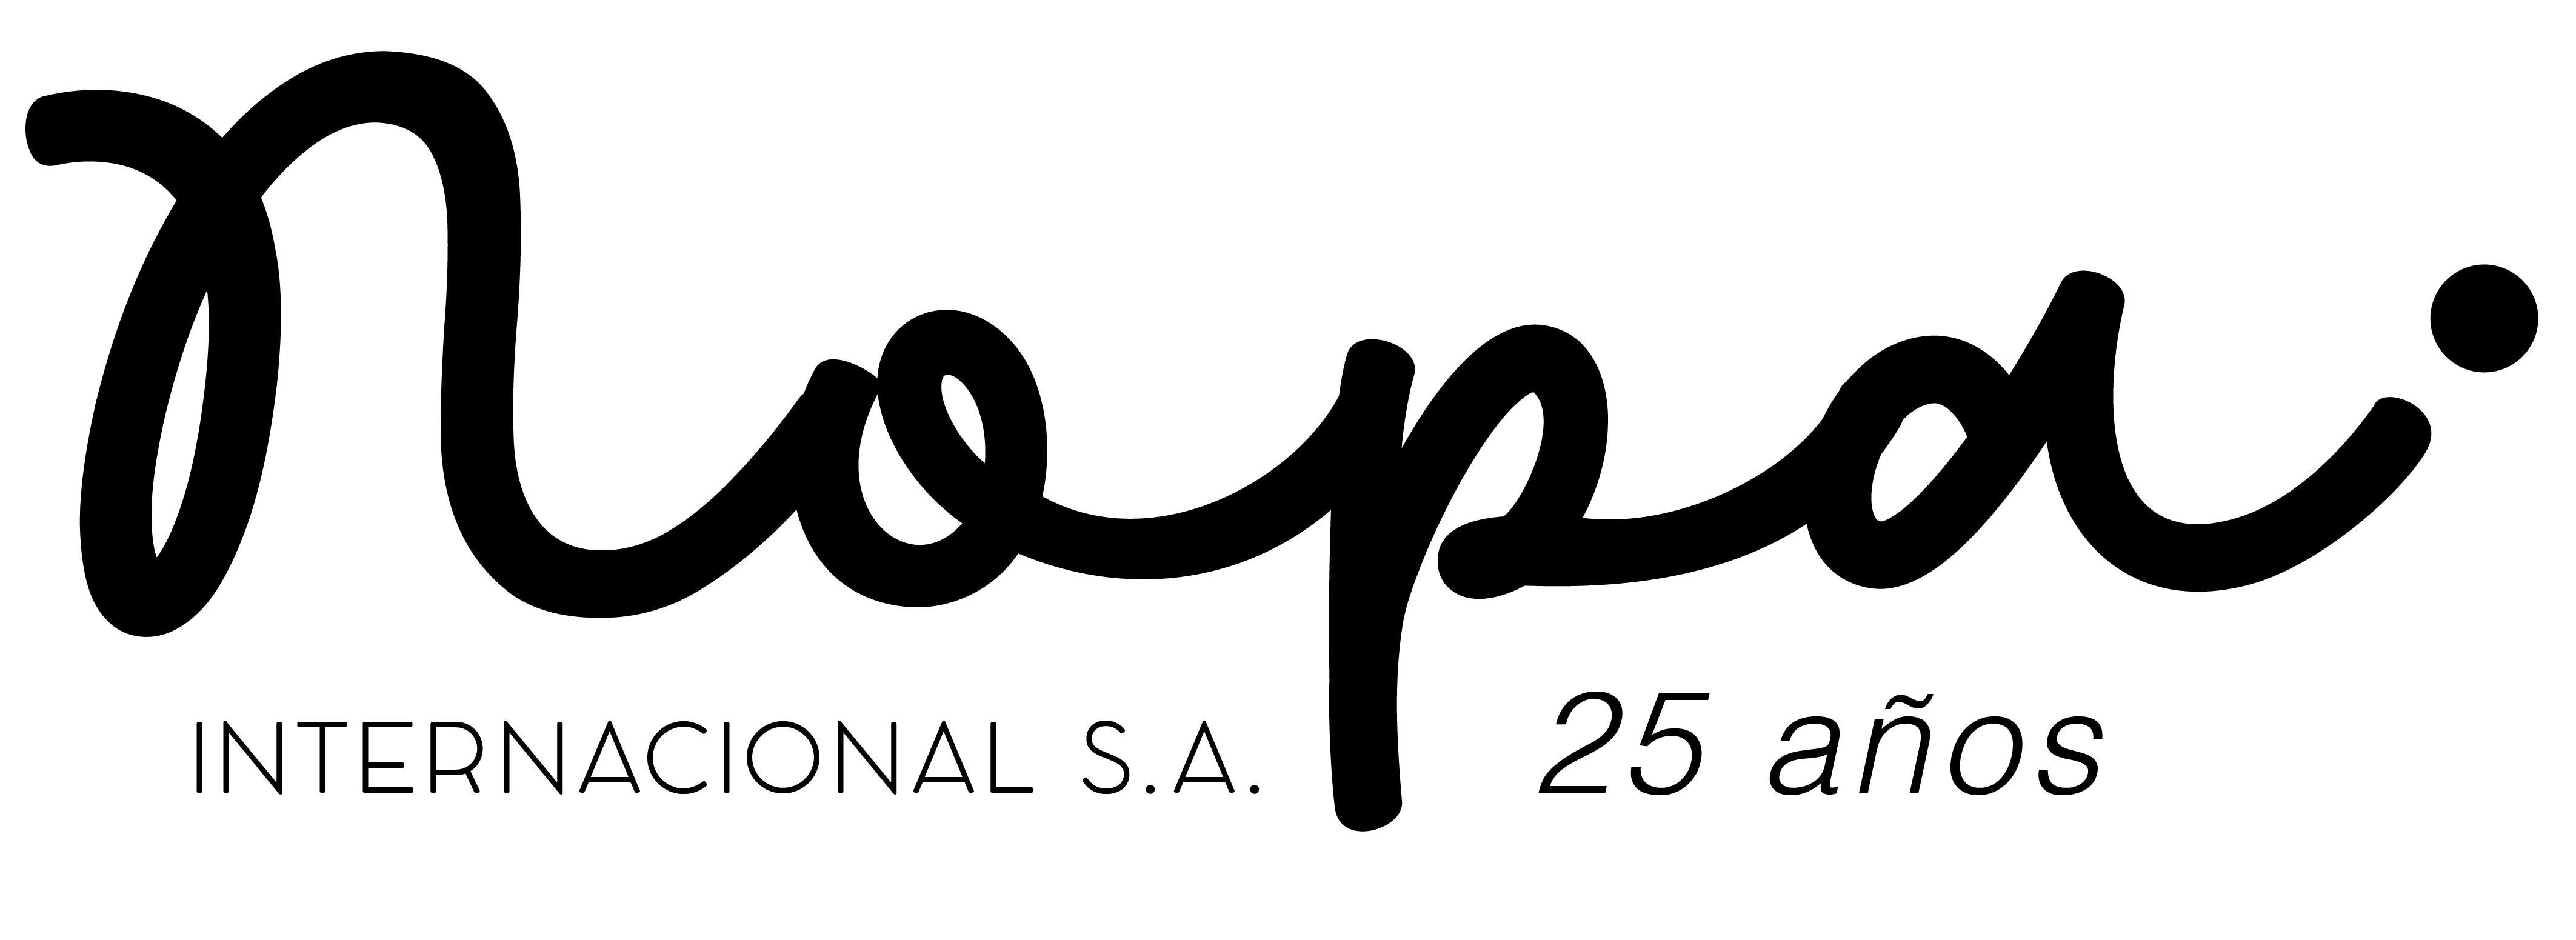 chileritas logo